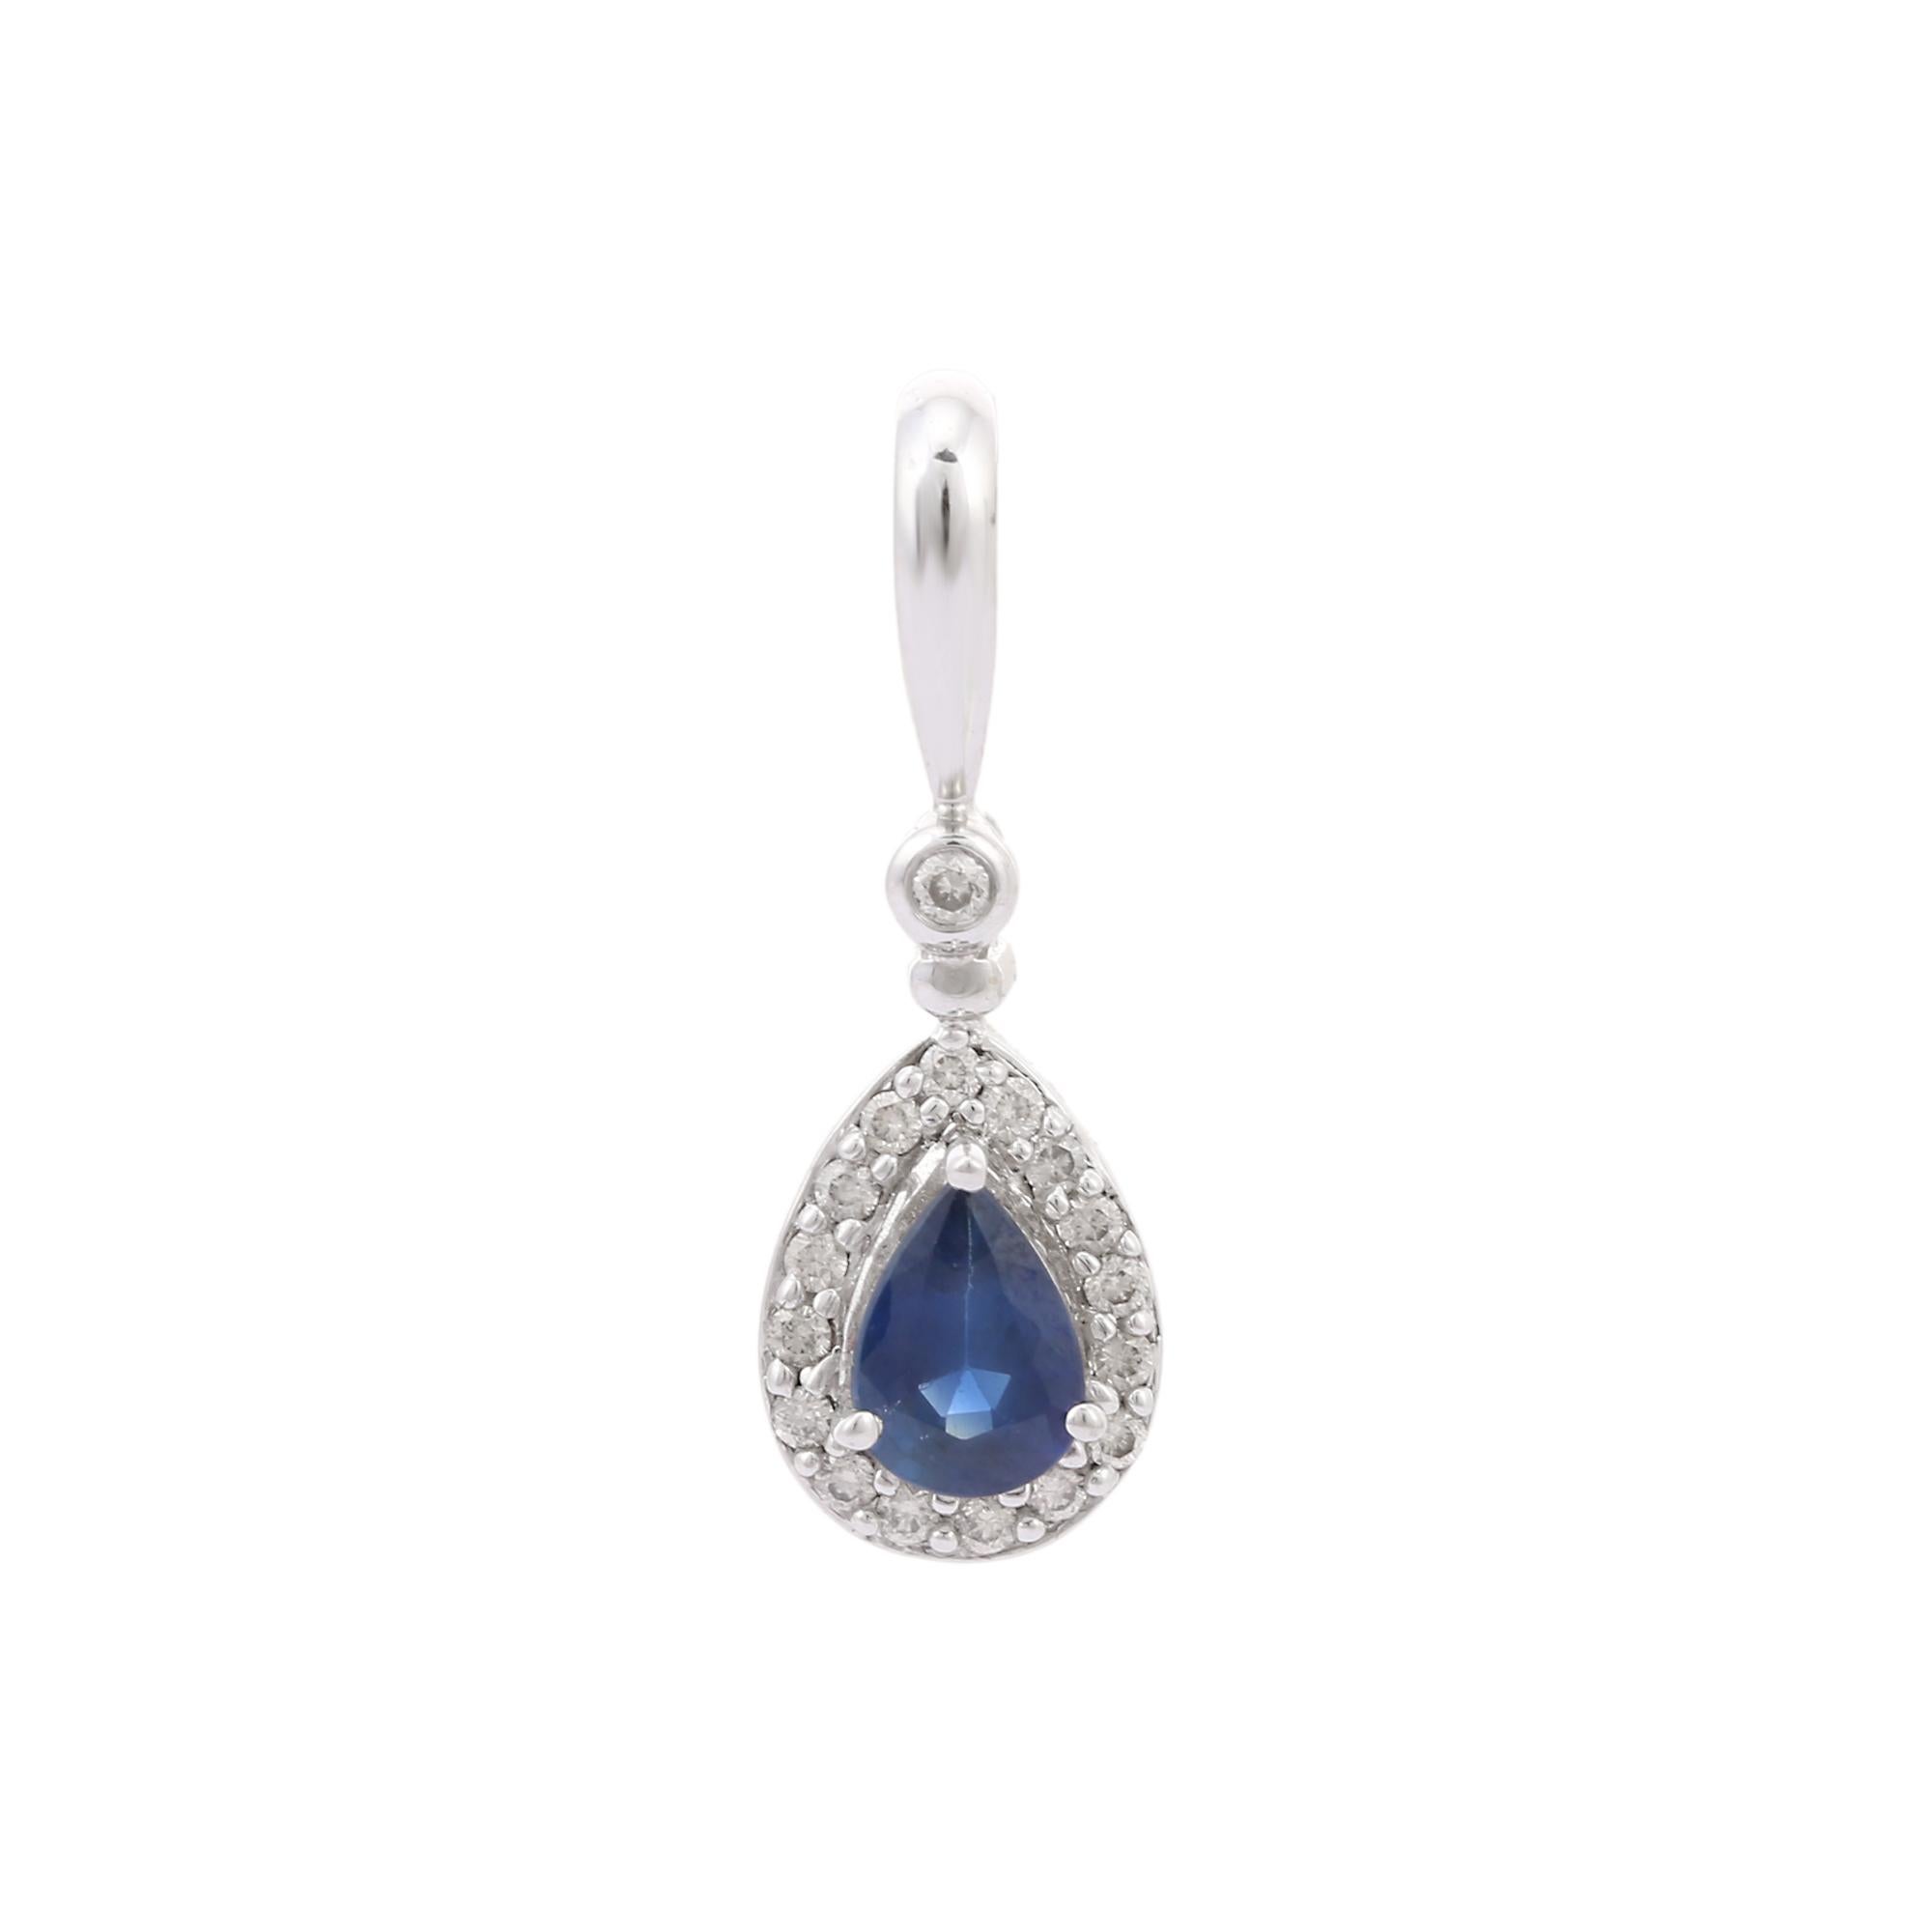 Art Deco Pear Cut Vivid Blue Sapphire Diamond Pendant Necklace in 18K White Gold For Sale